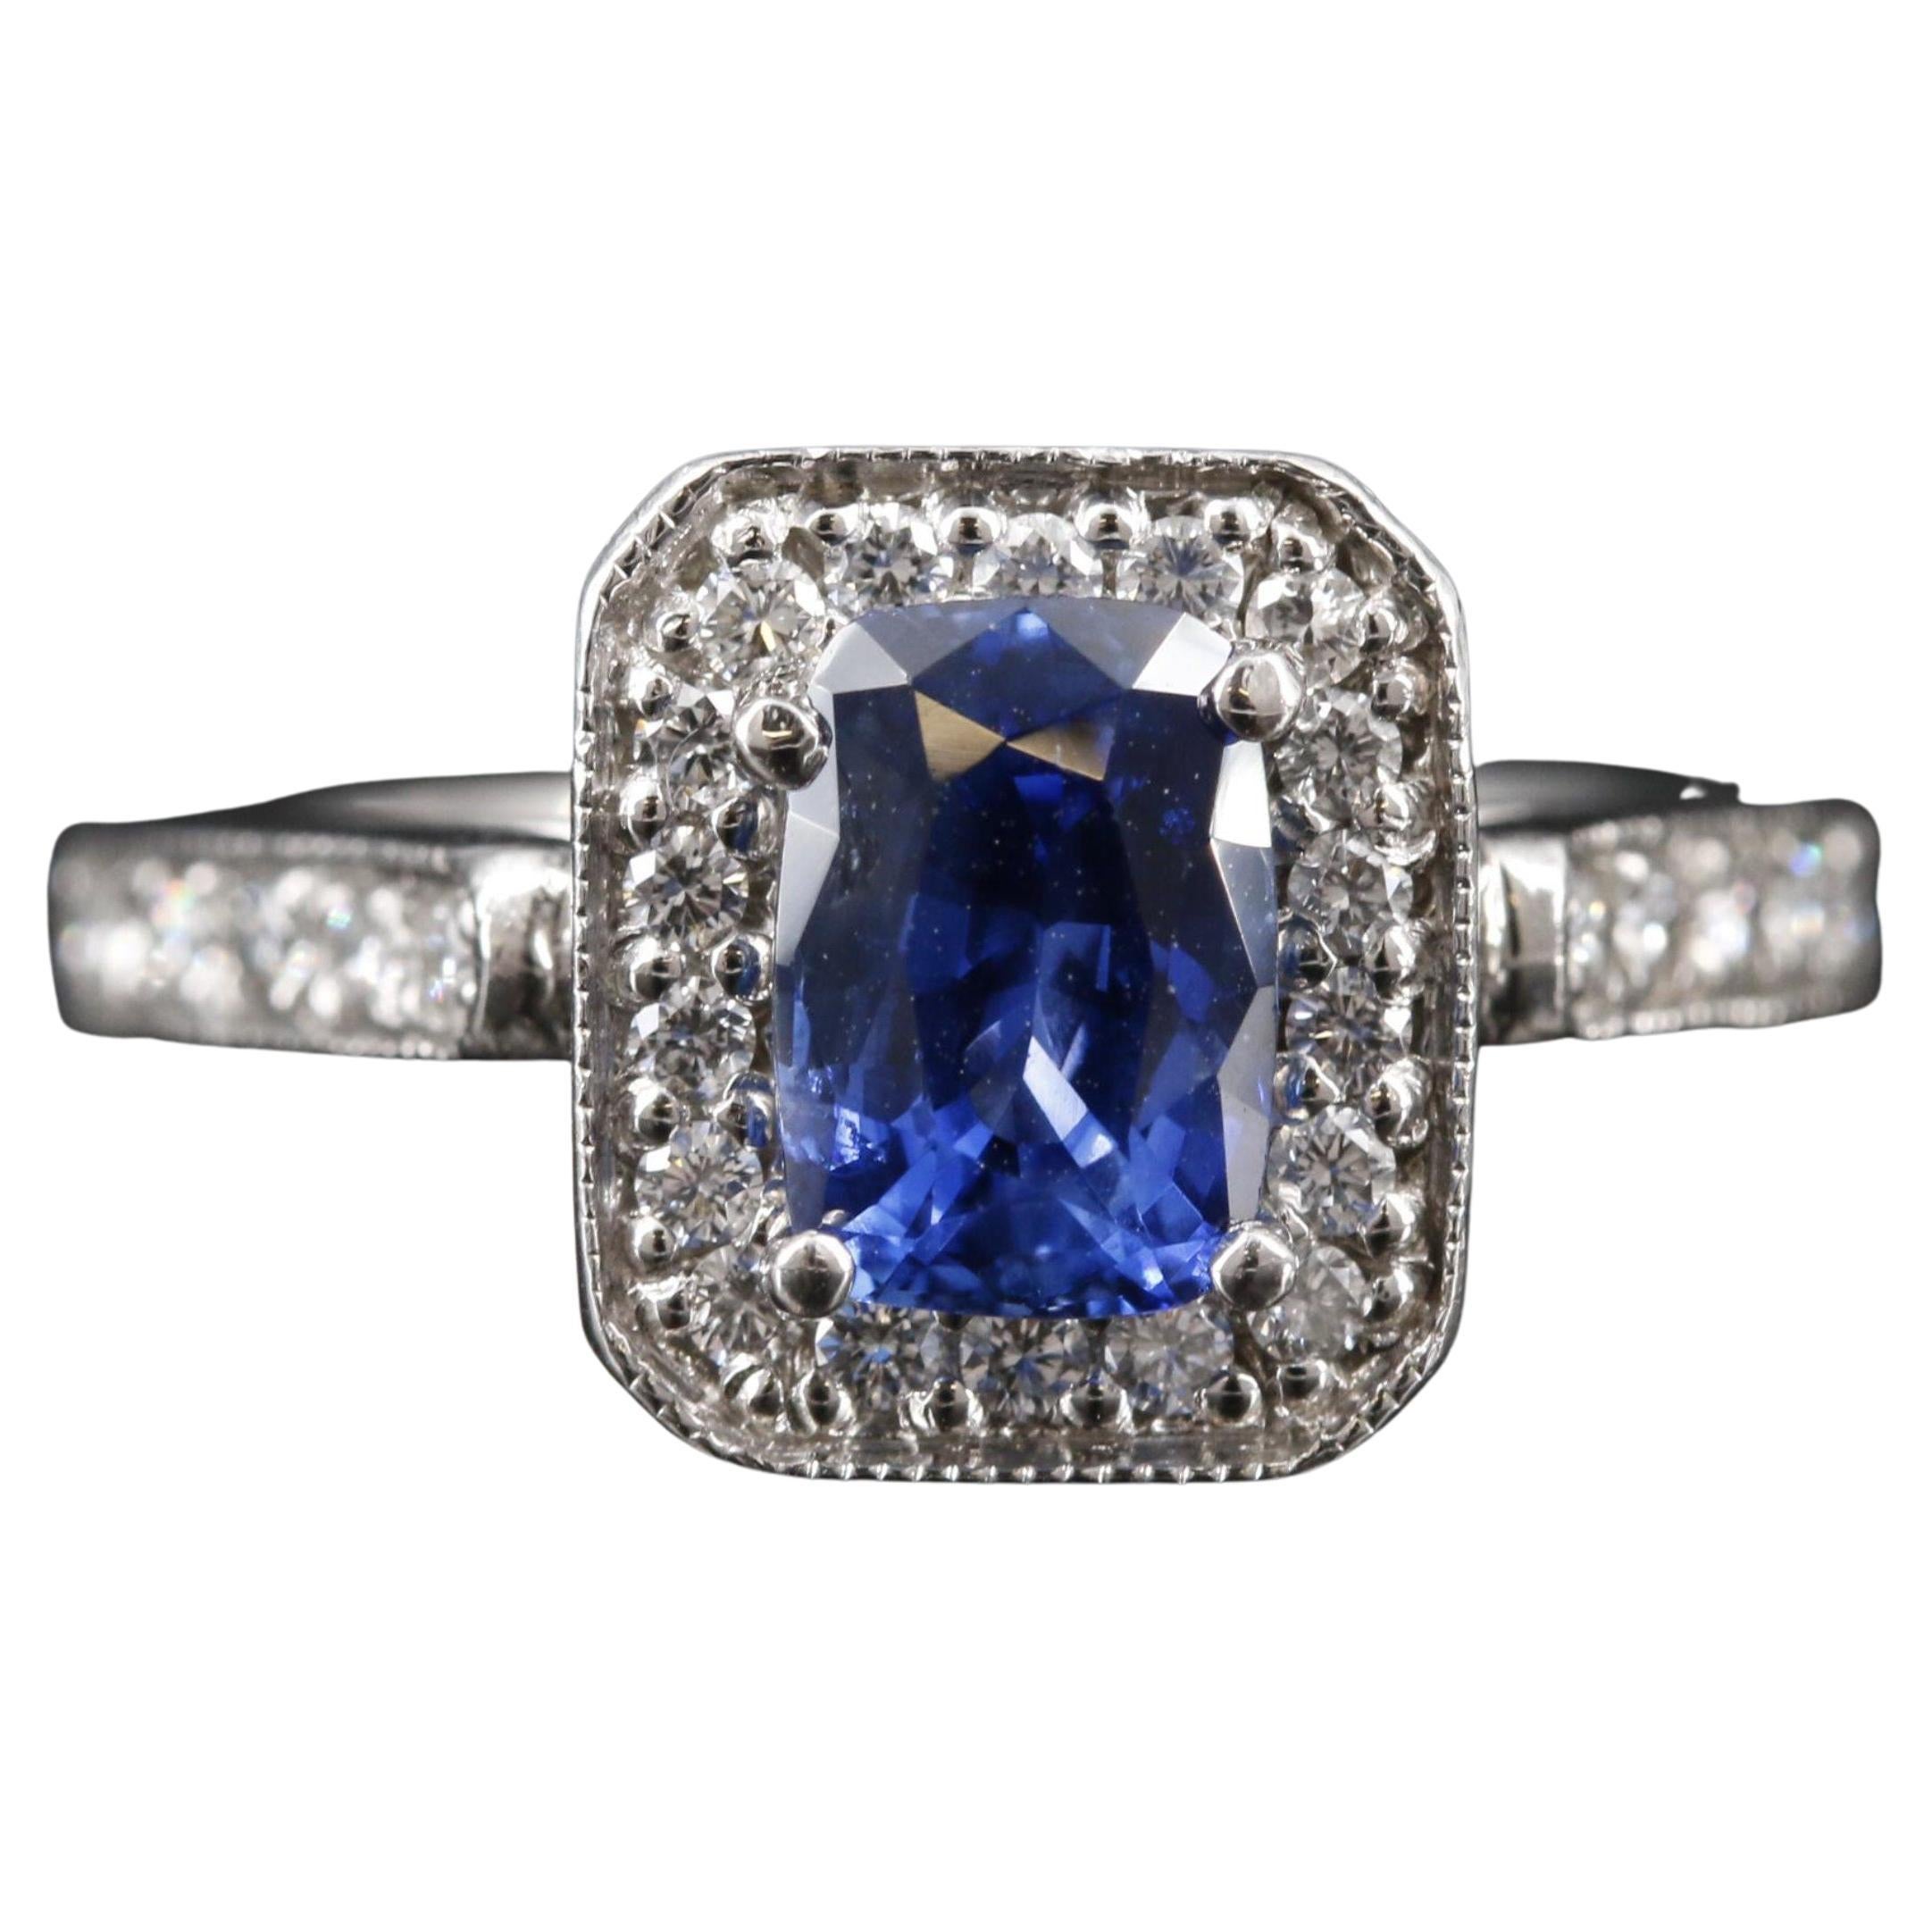 For Sale:  Art Deco Cushion Cut Sapphire Engagement Ring Halo Vintage Diamond Wedding Ring